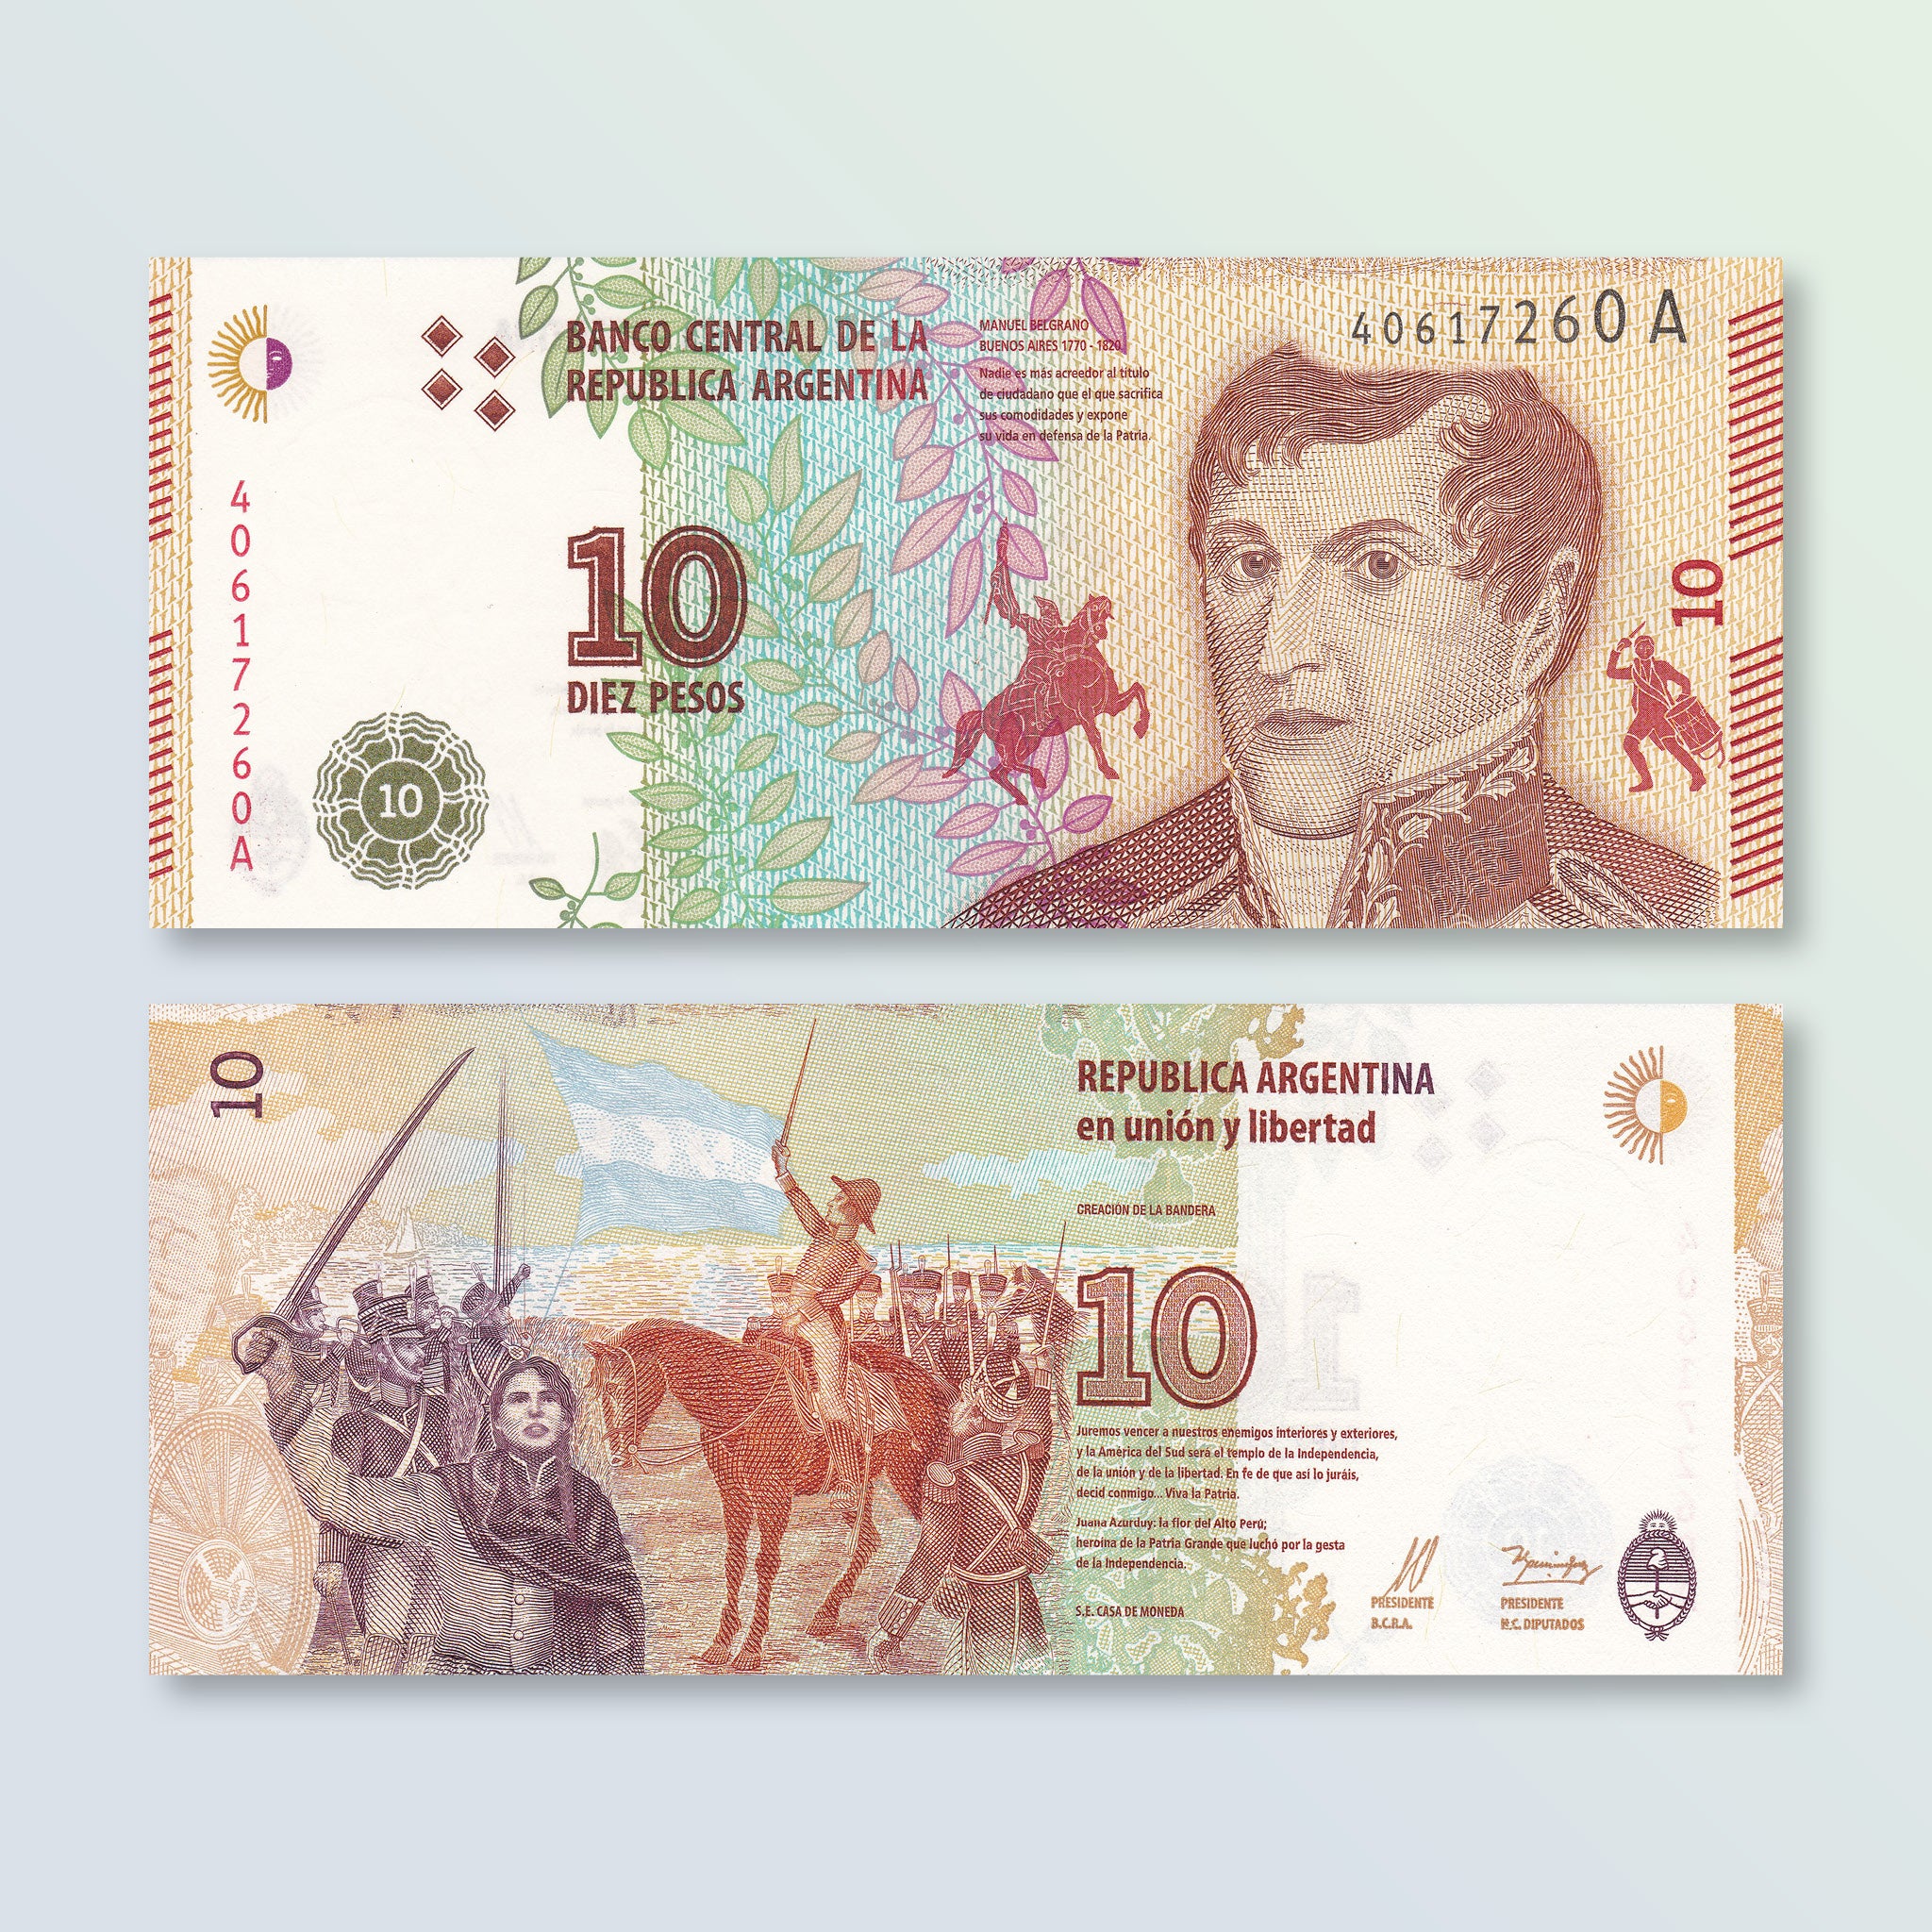 Argentina 10 Pesos, 2016, B416a, P360, UNC - Robert's World Money - World Banknotes